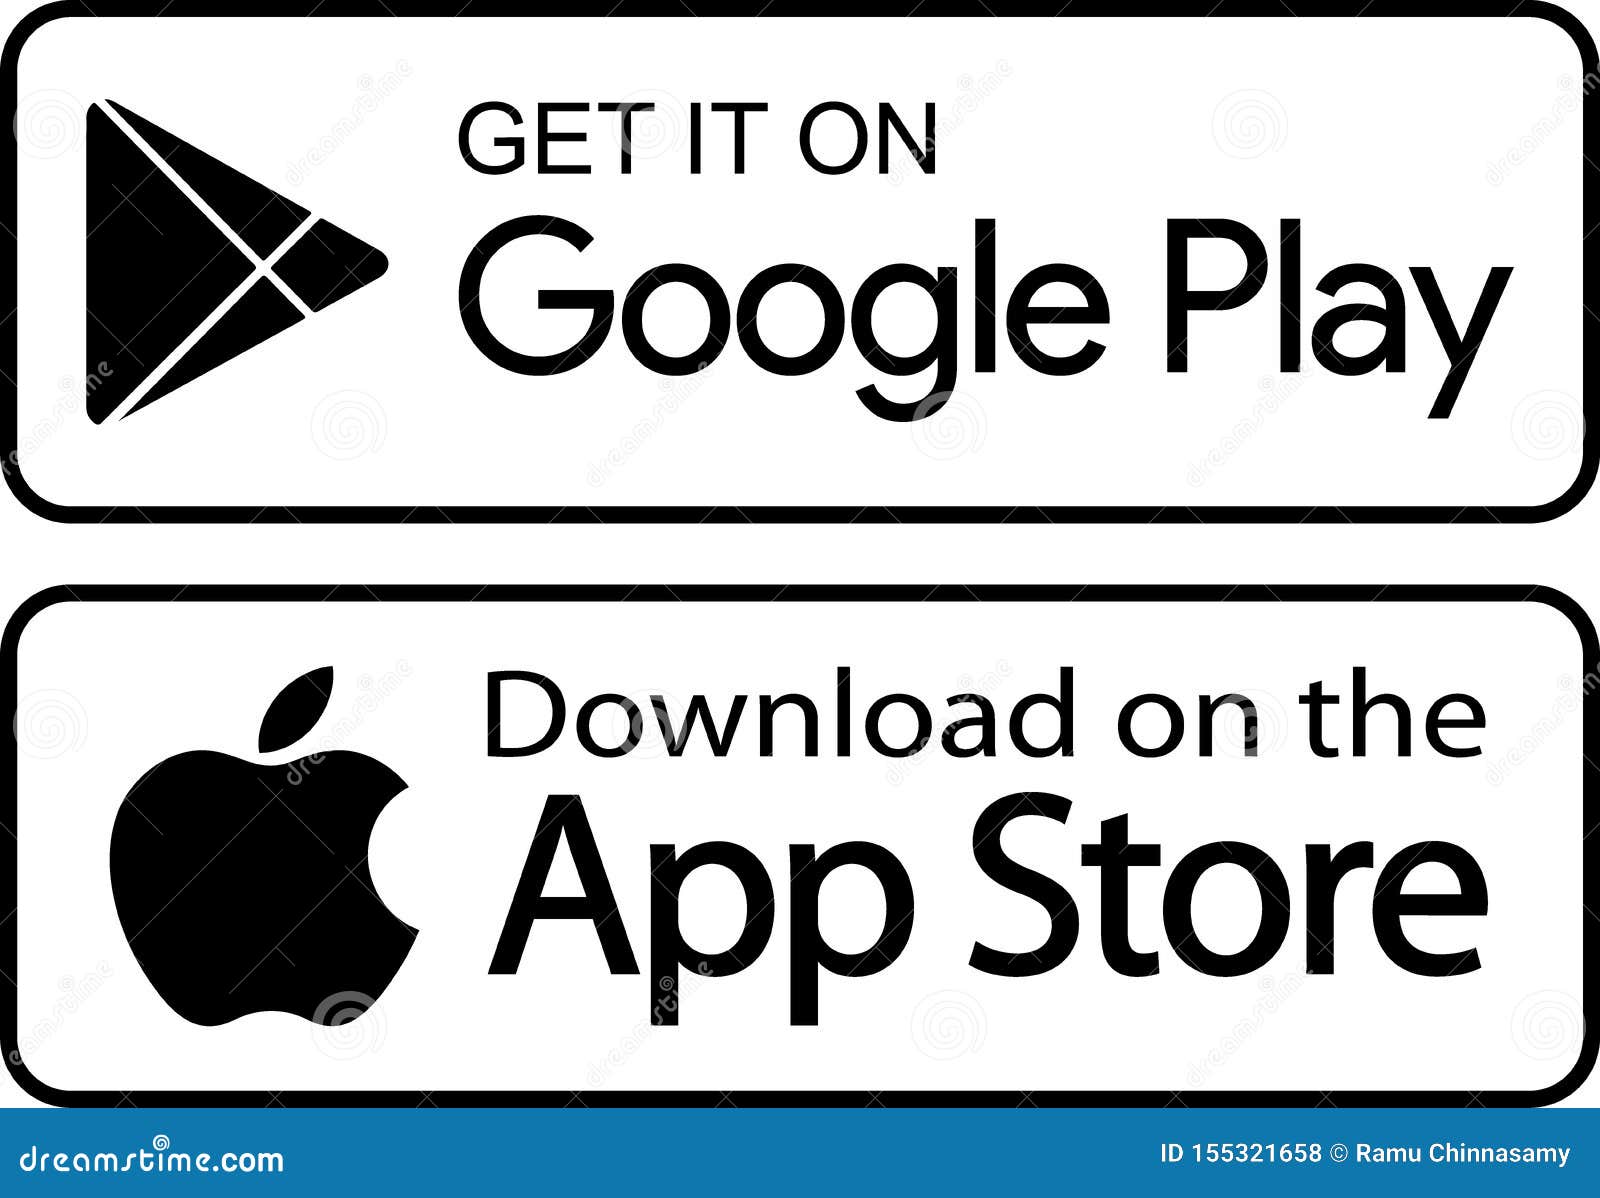 JOGAFACIL - Apps on Google Play